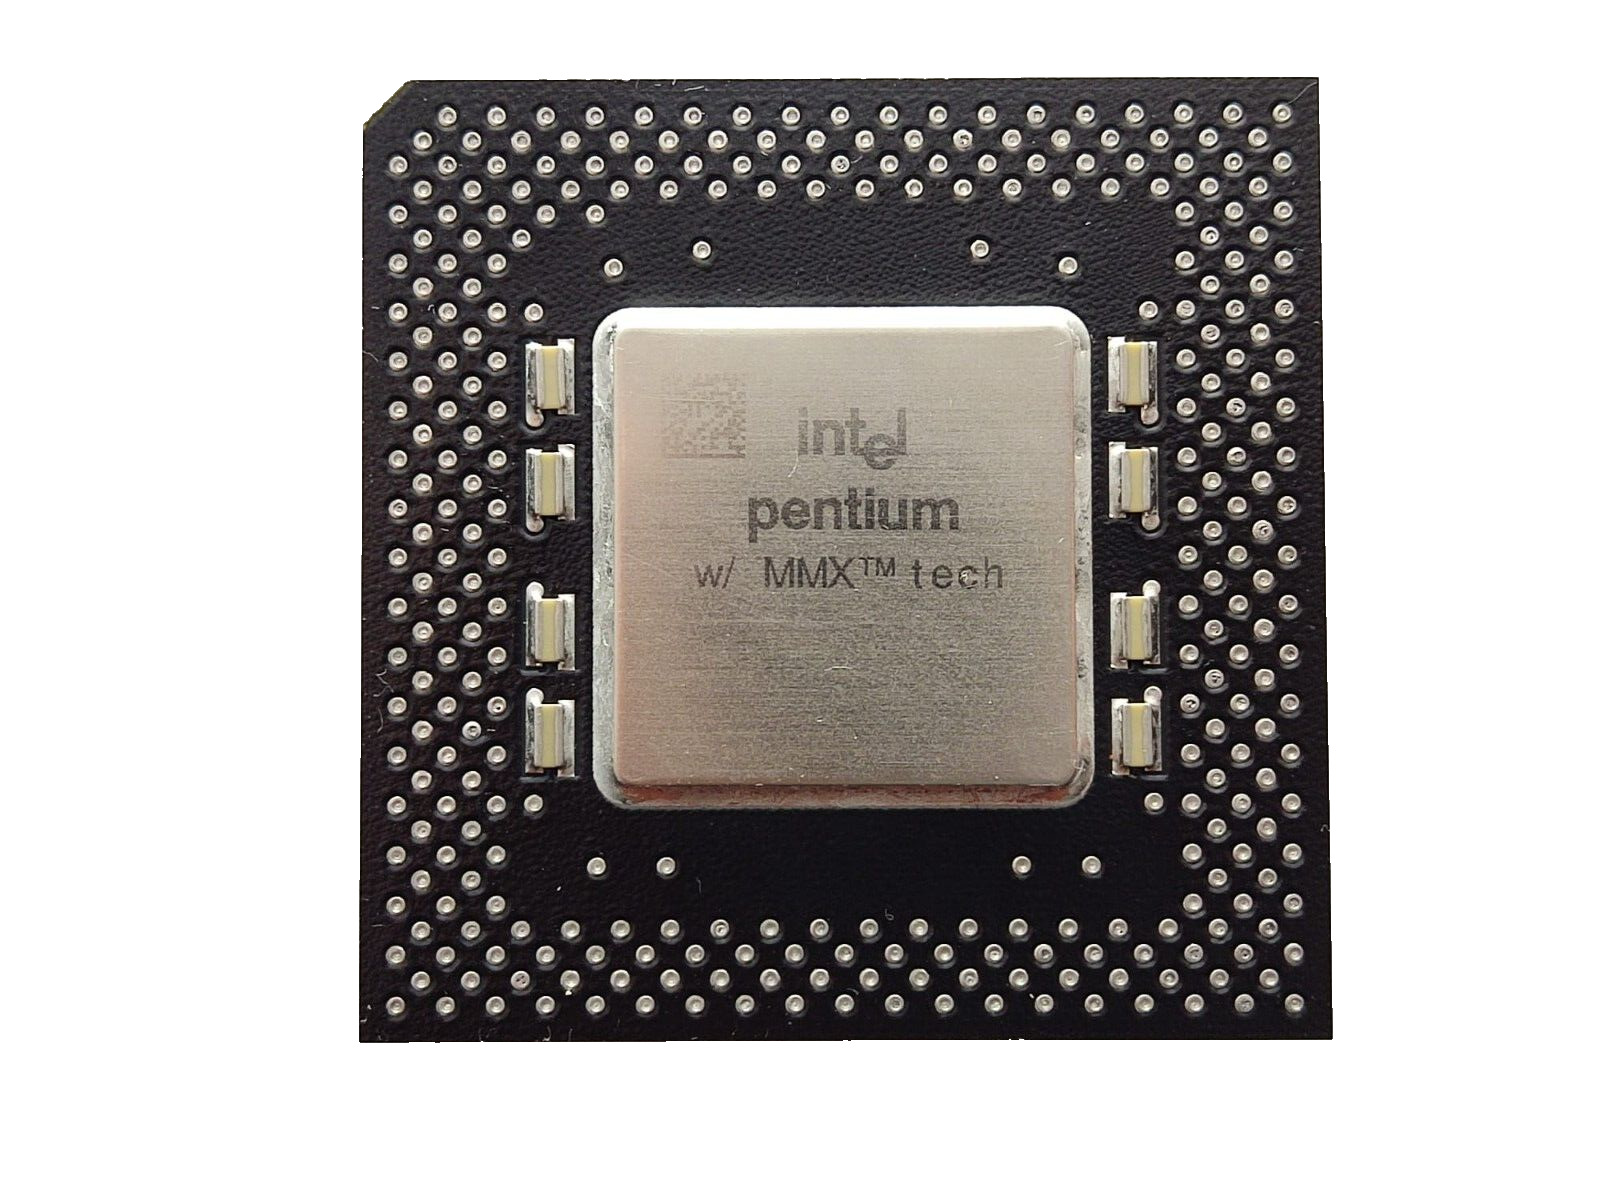 Intel Pentium P233 MMX SL27S socket 7 233 Mhz CPU FV80503233